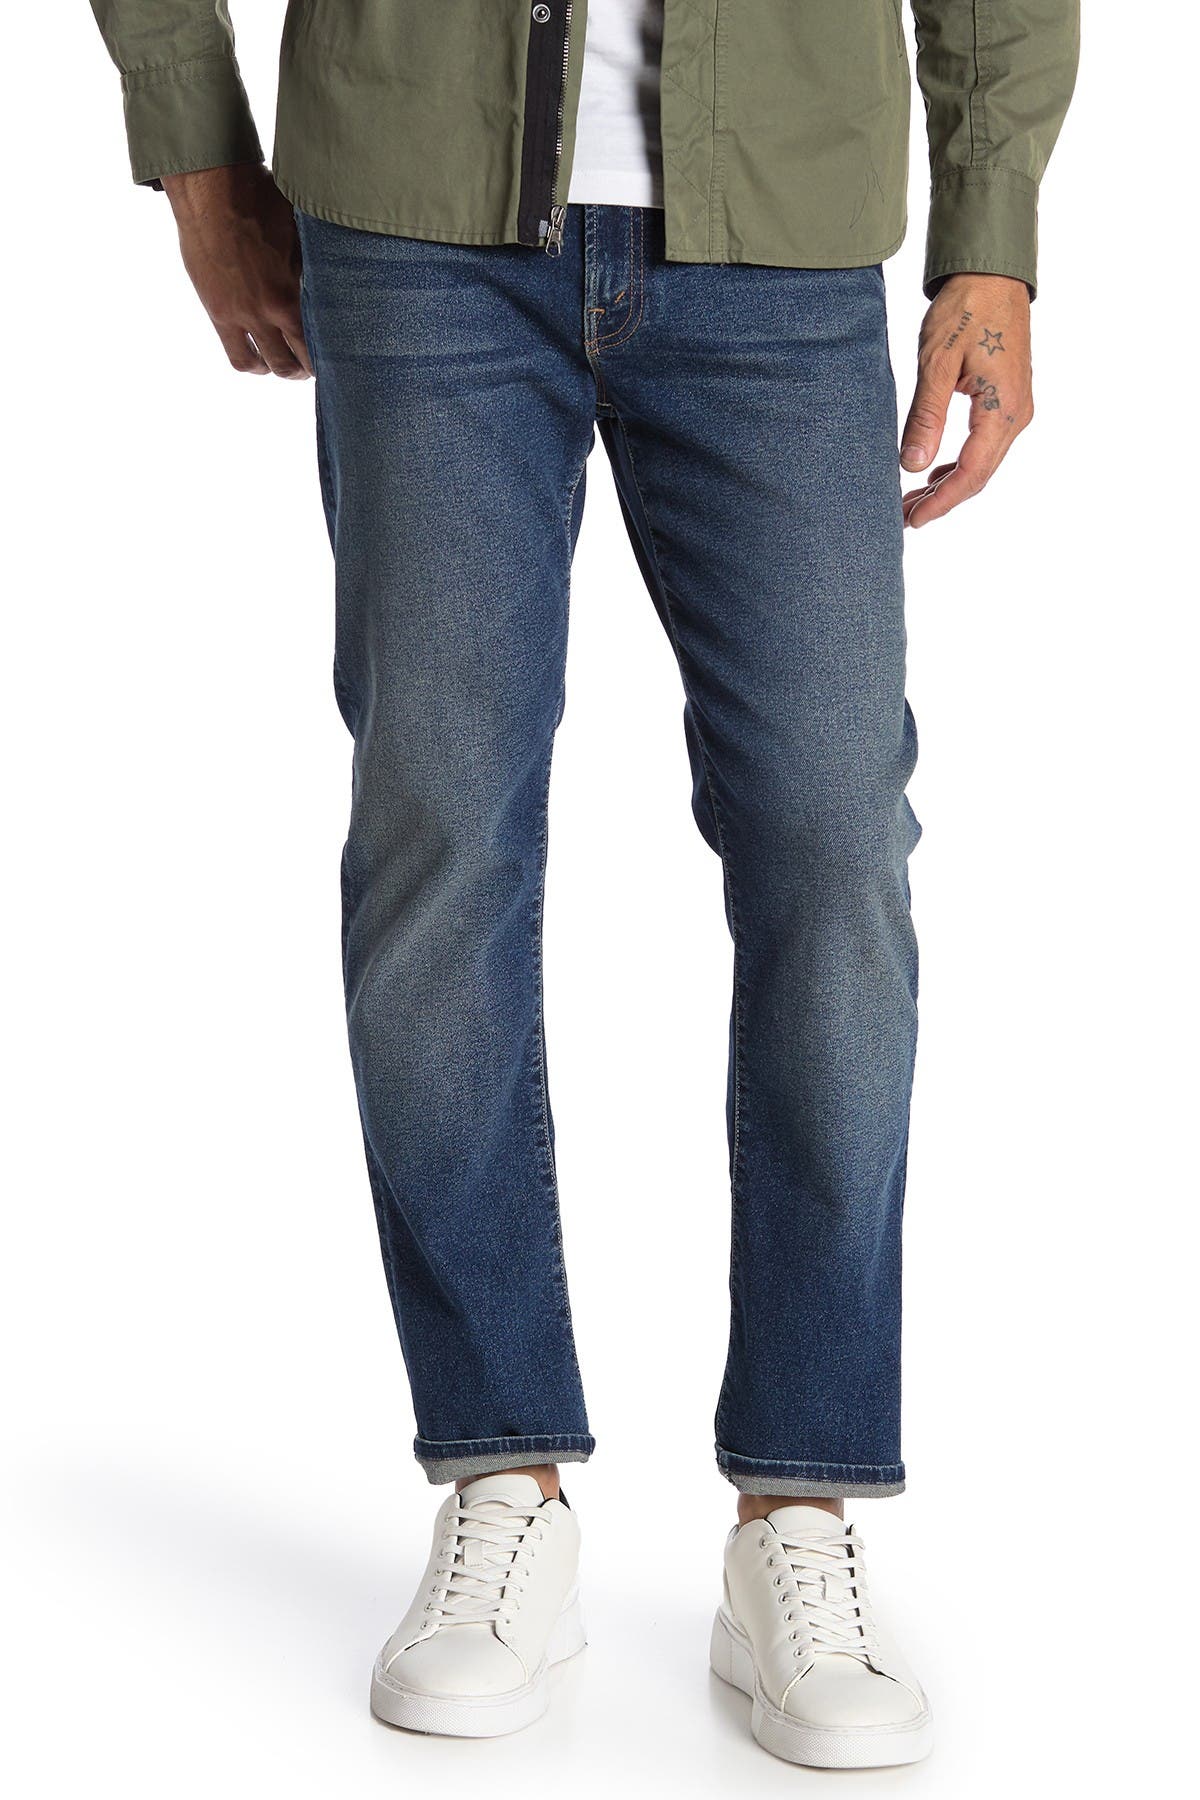 34x36 bootcut jeans